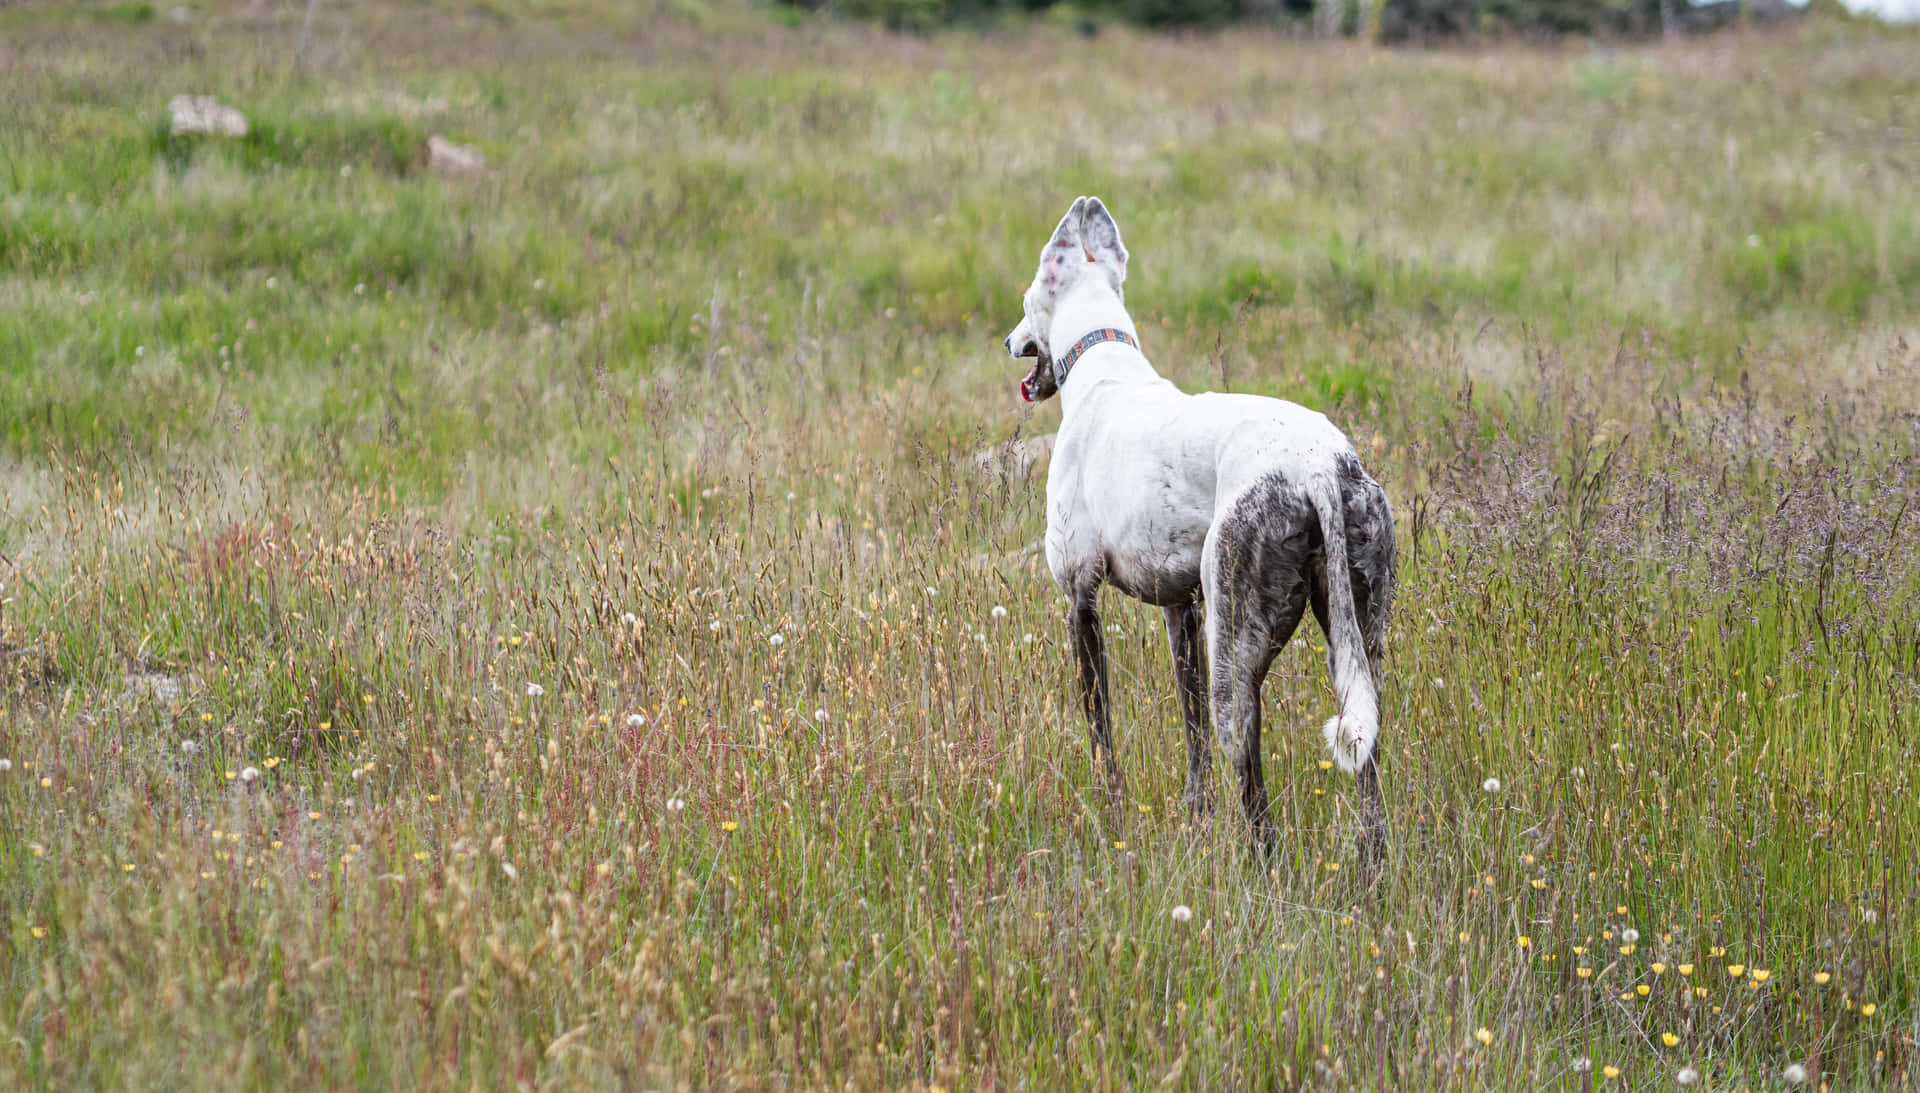 Greyhound racing brings joy to people around the world